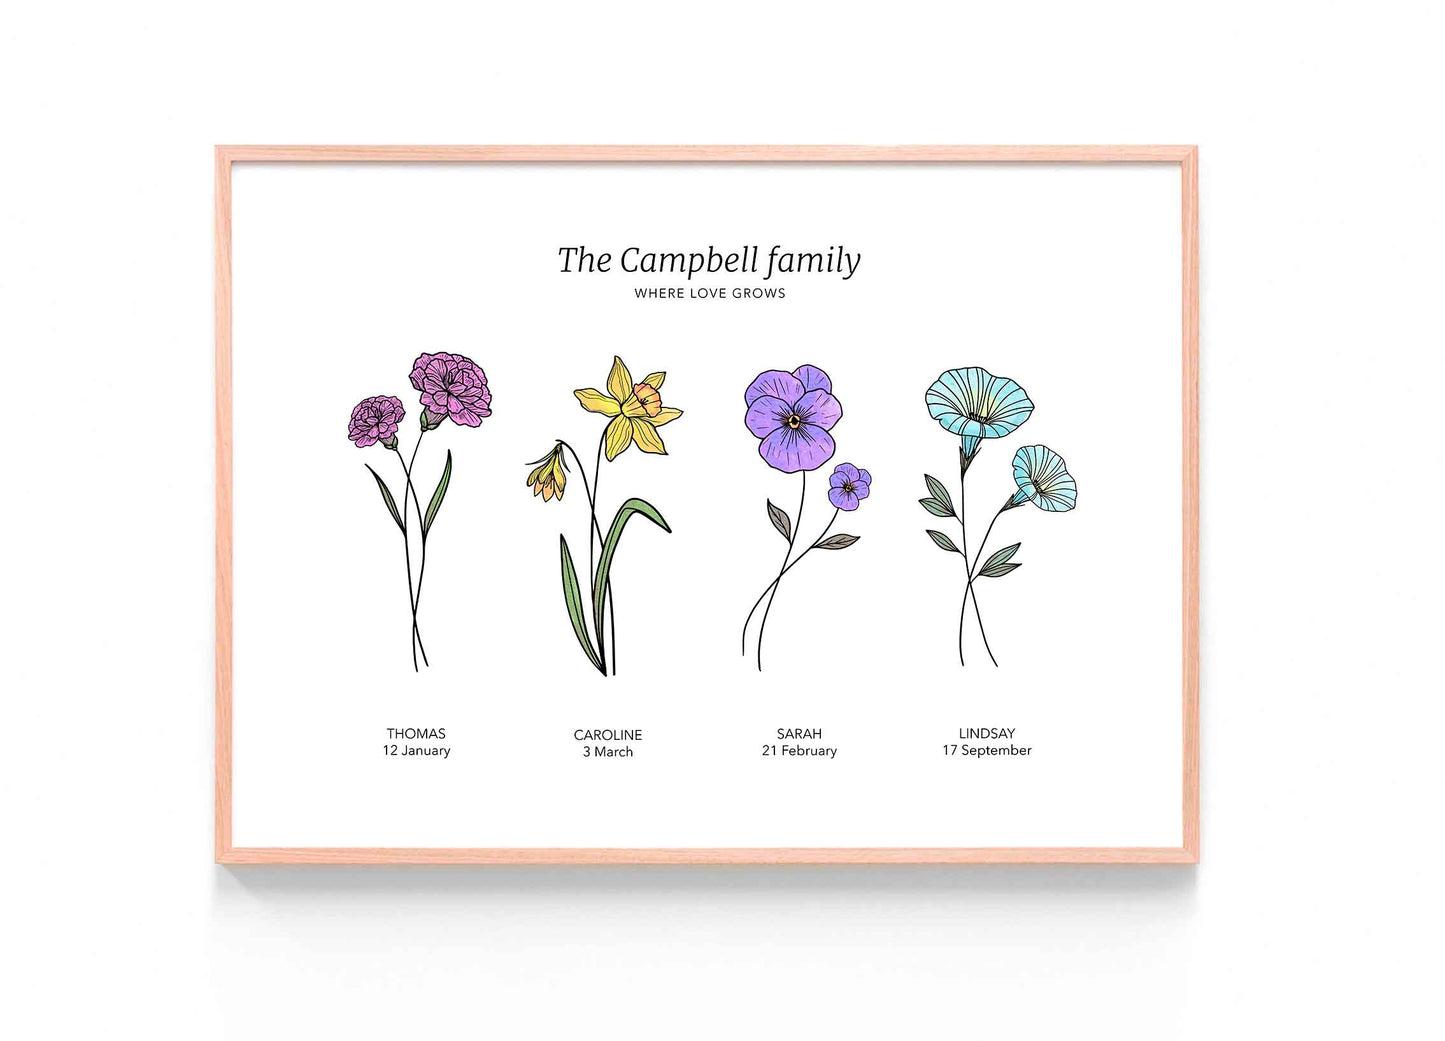 YOUR BIRTH FLOWERS - Generic flowers print